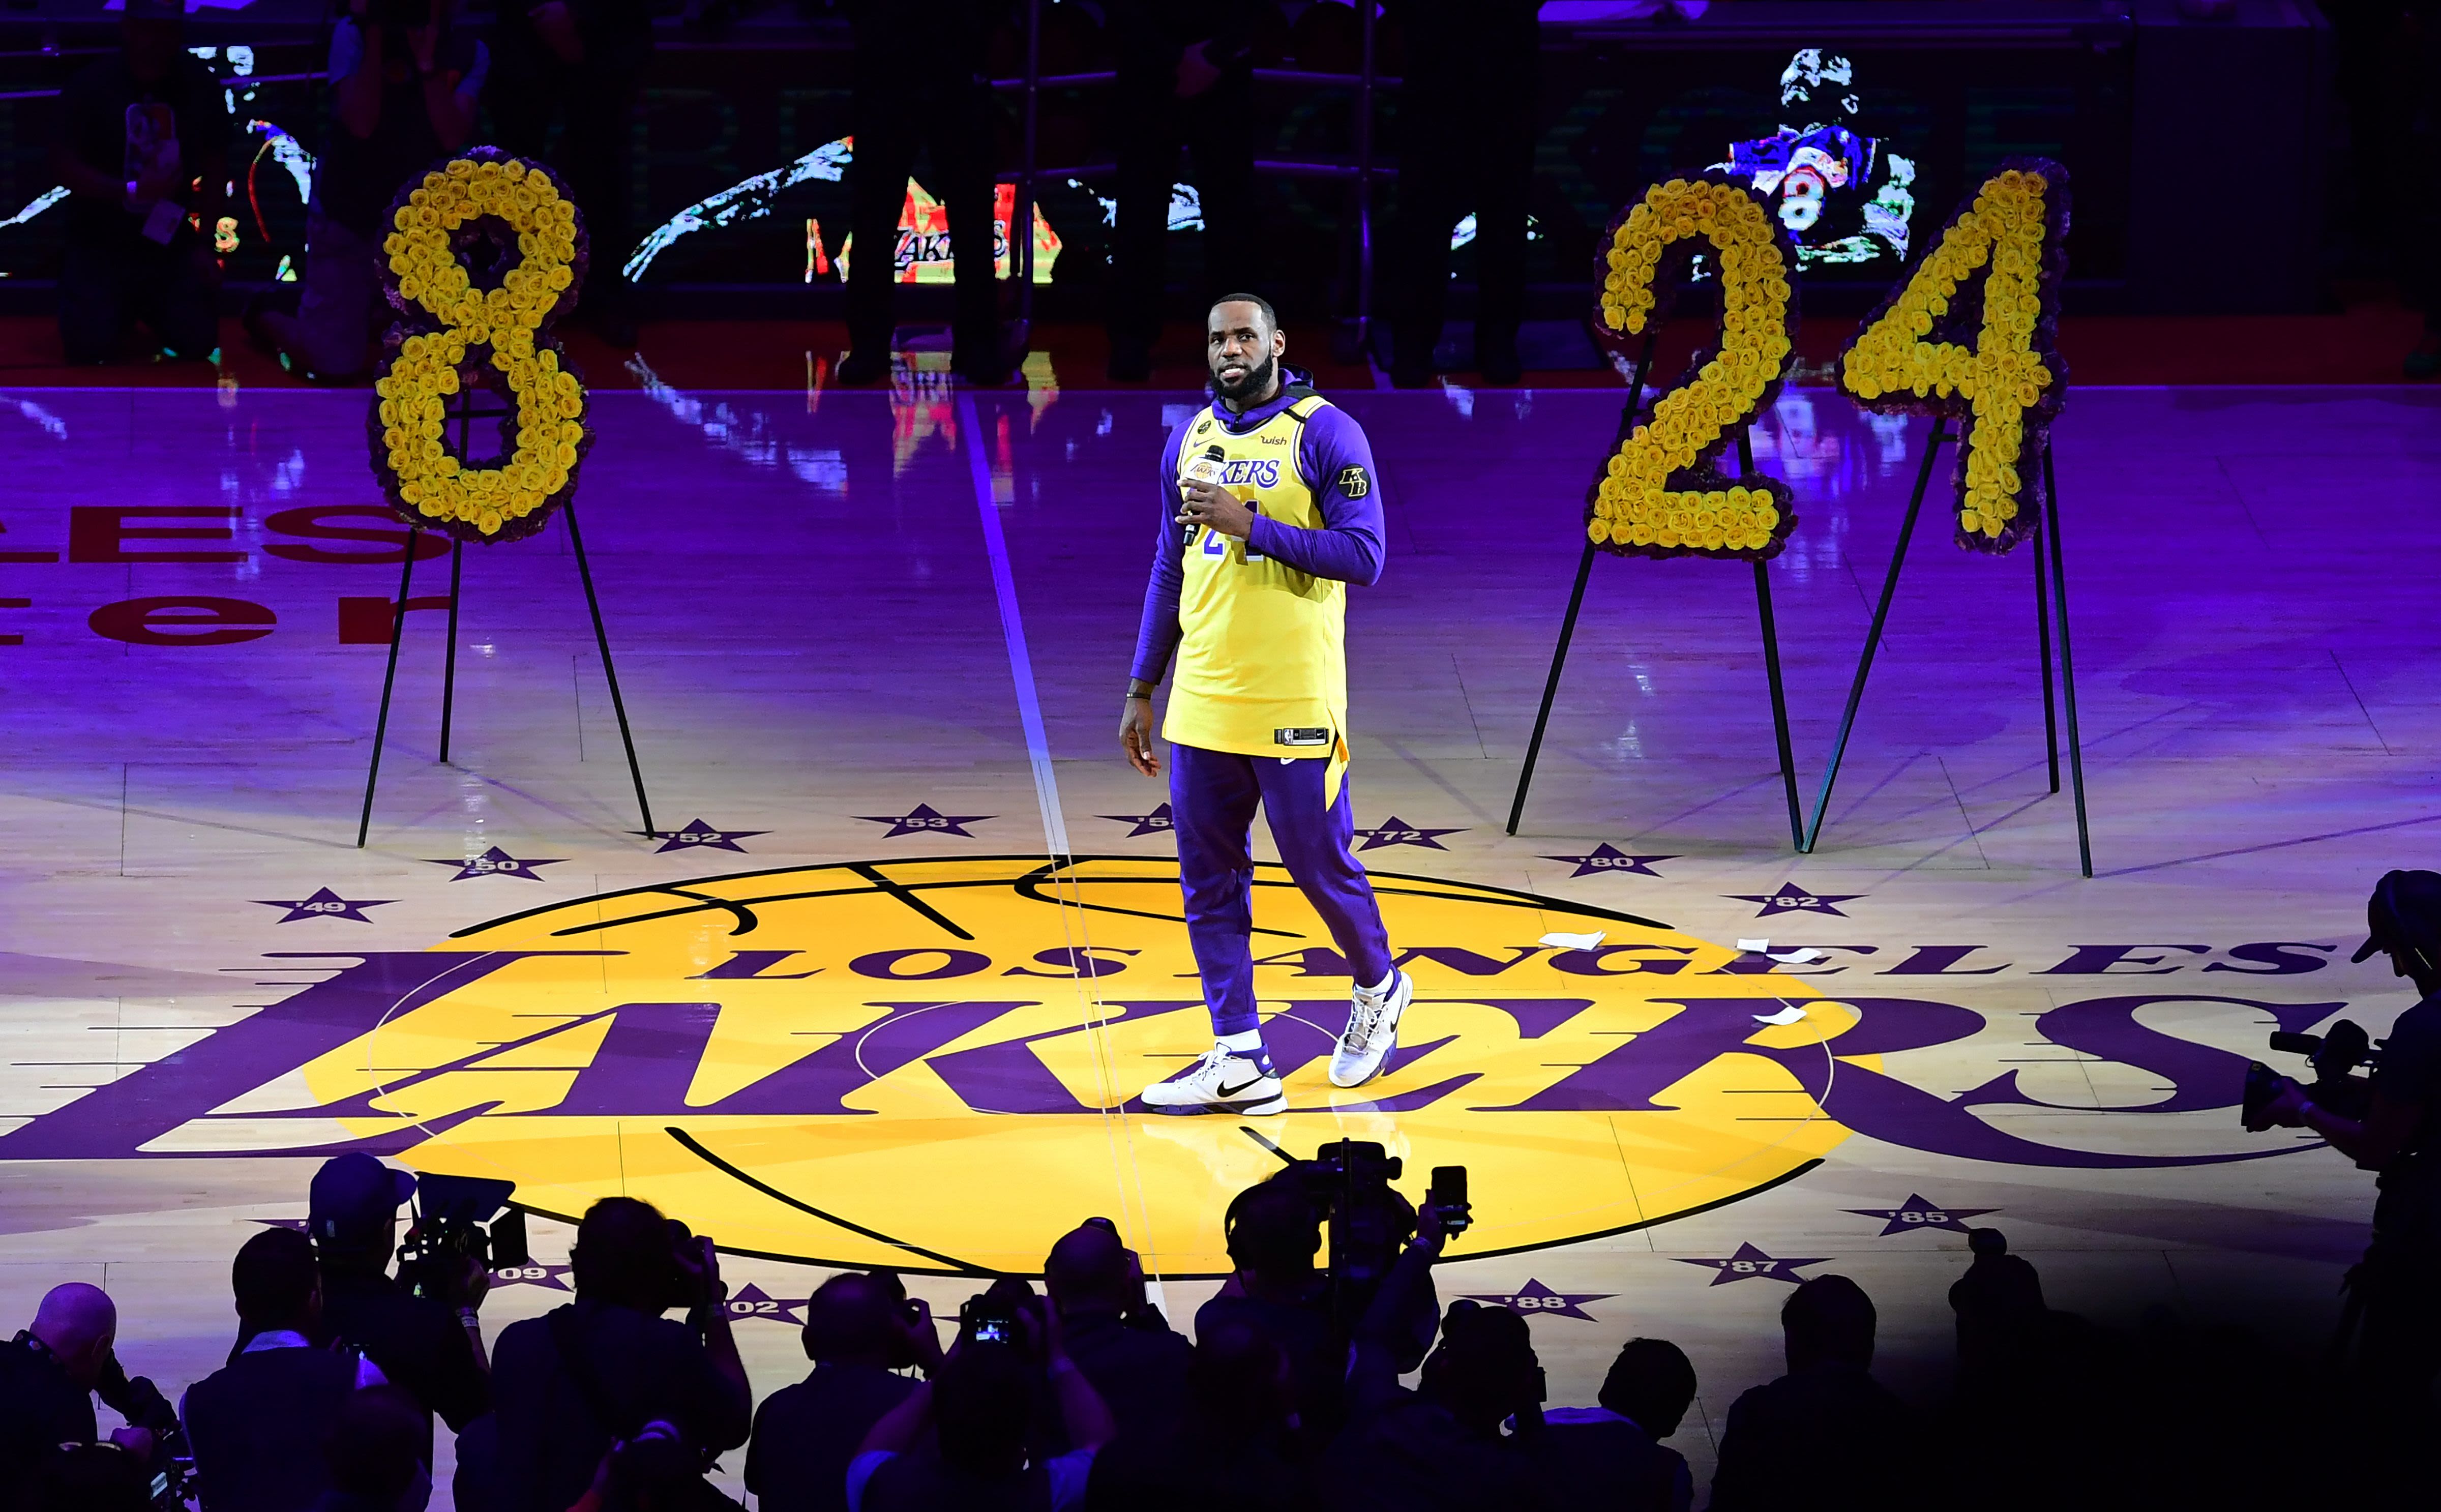 LeBron James 23 - The Lakers will wear 'Black Mamba